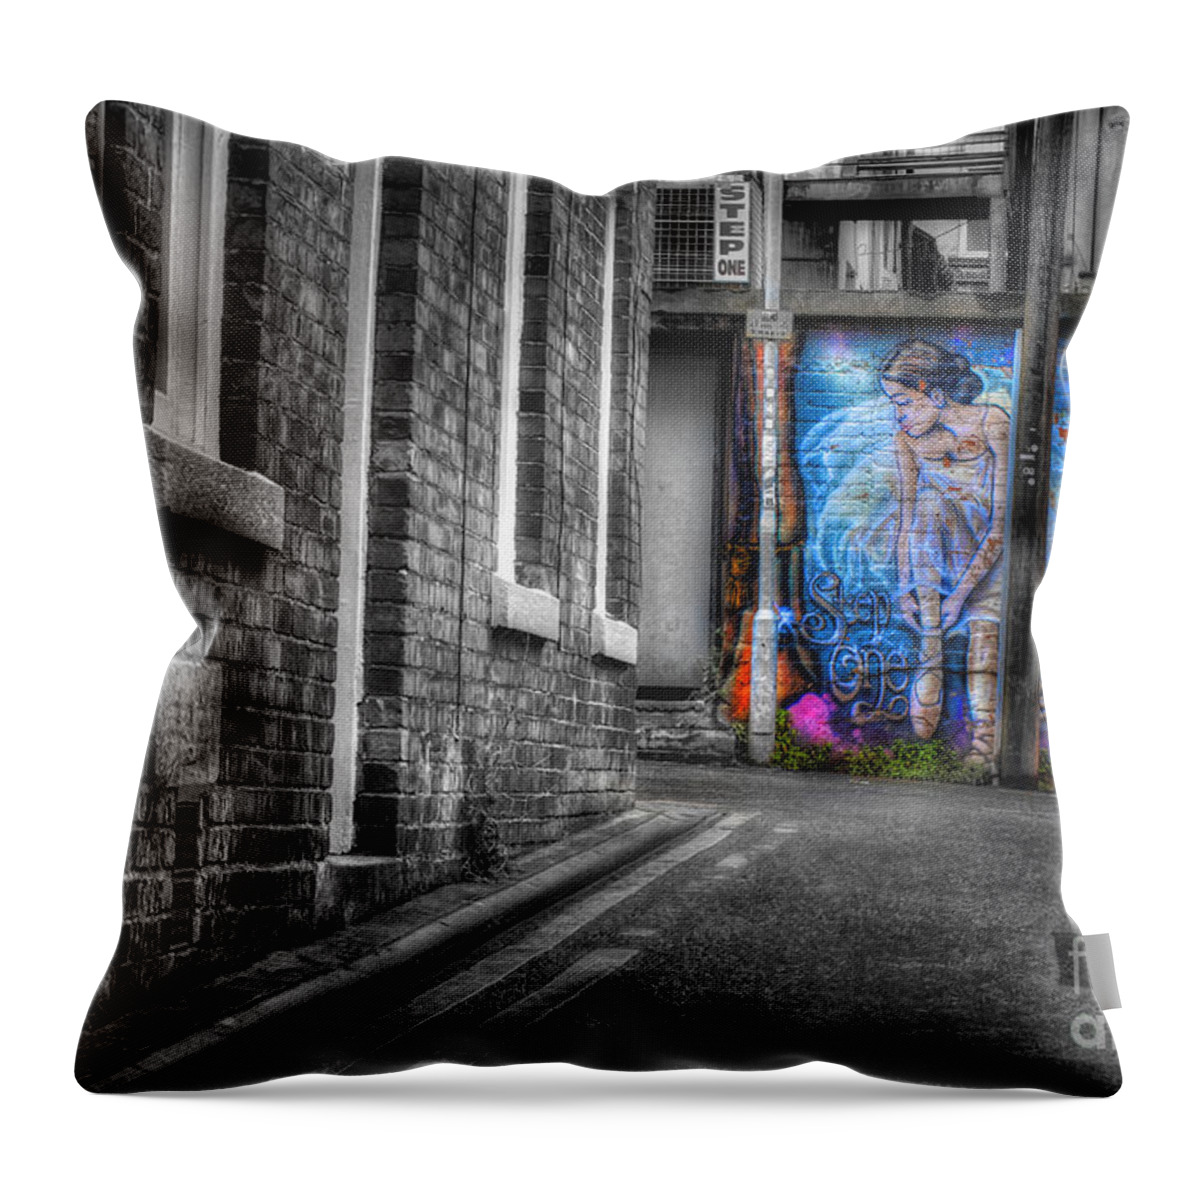 Art Throw Pillow featuring the photograph Street Art by Ian Mitchell